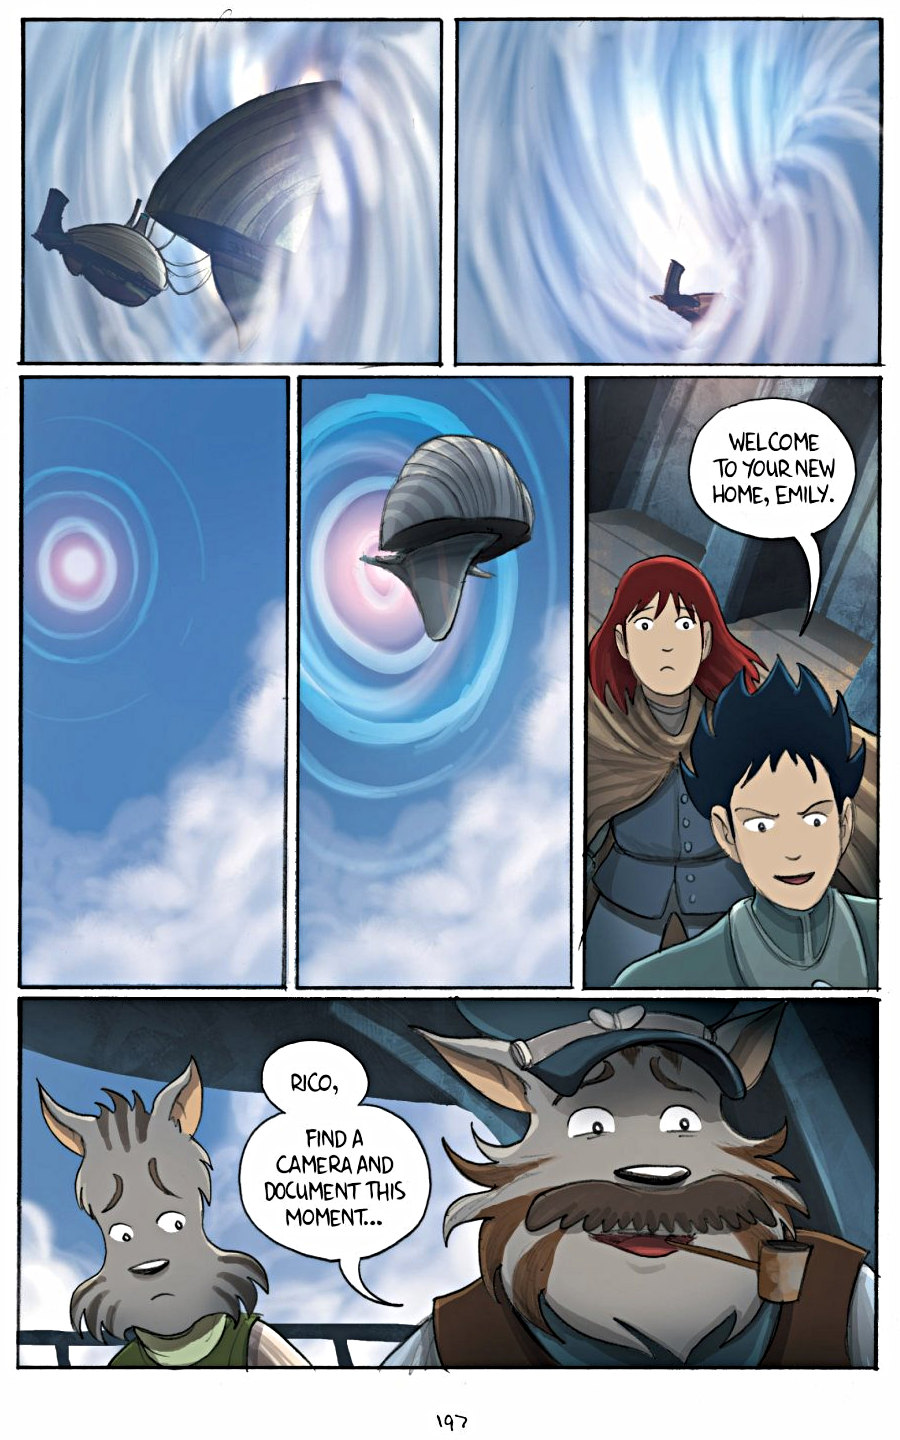 page 197 of amulet 3 cloud searchers graphic novel by kazu kibuishi